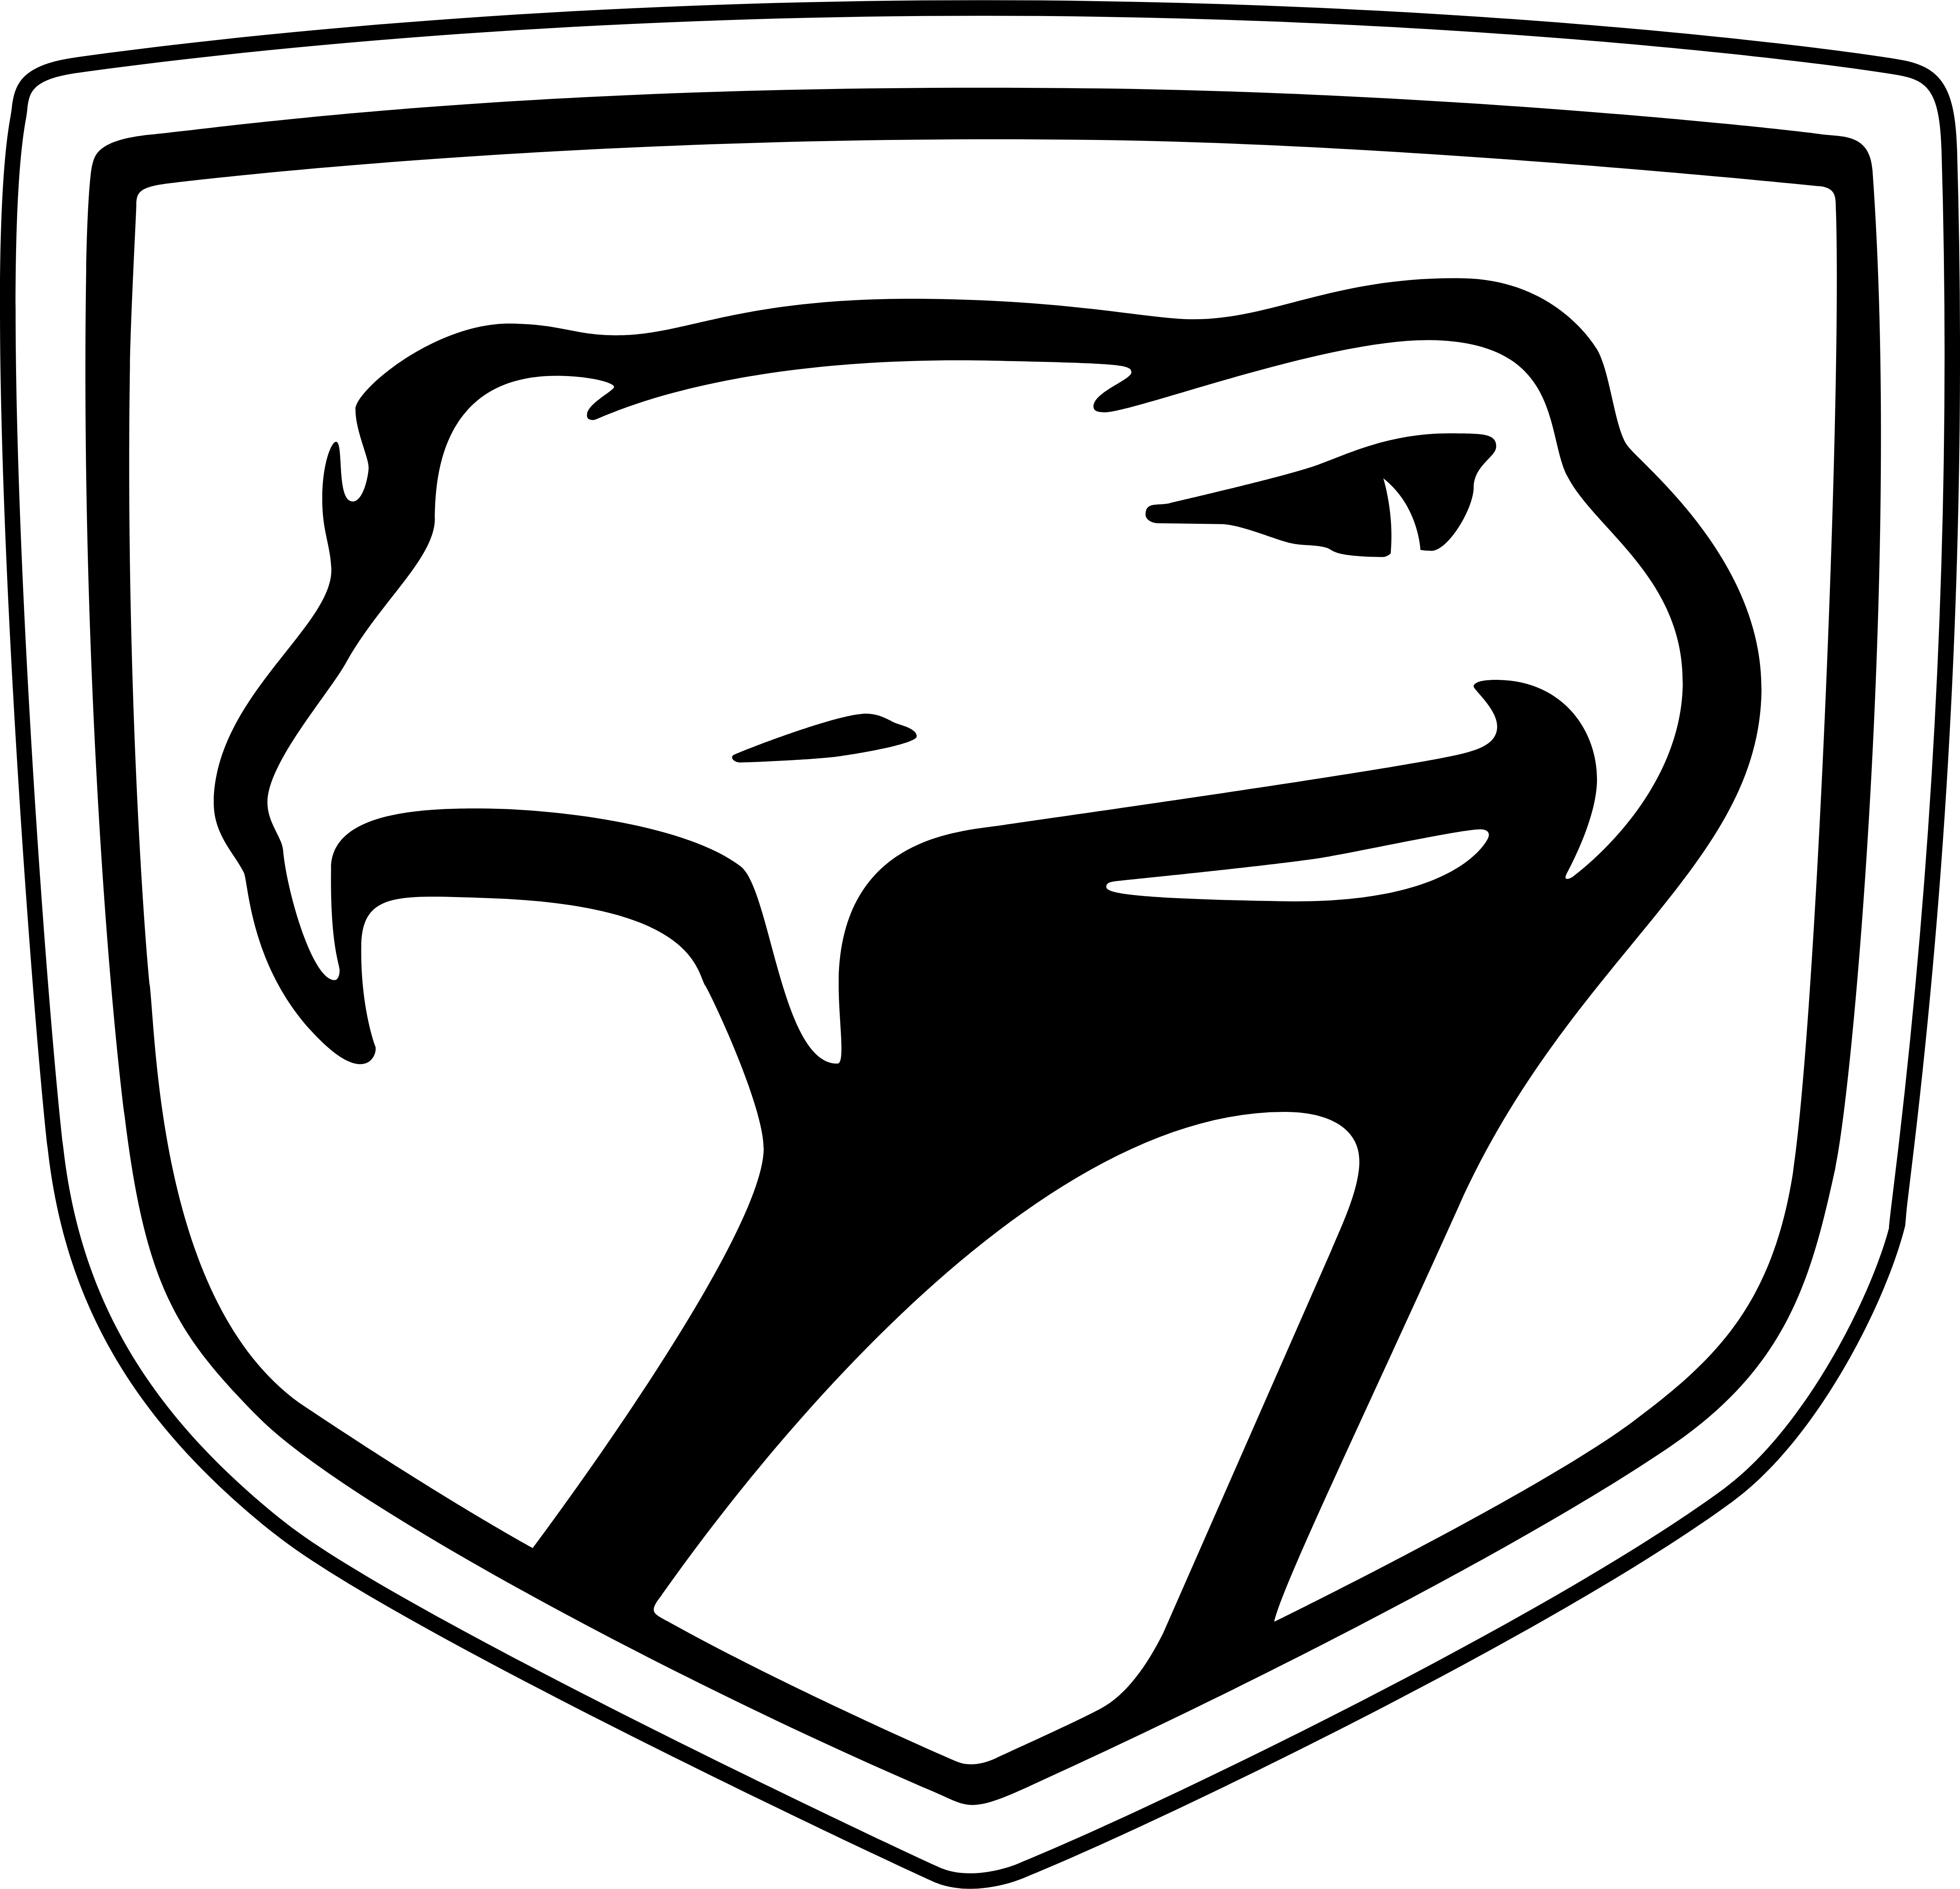 Dodge Logo PNG HD Image